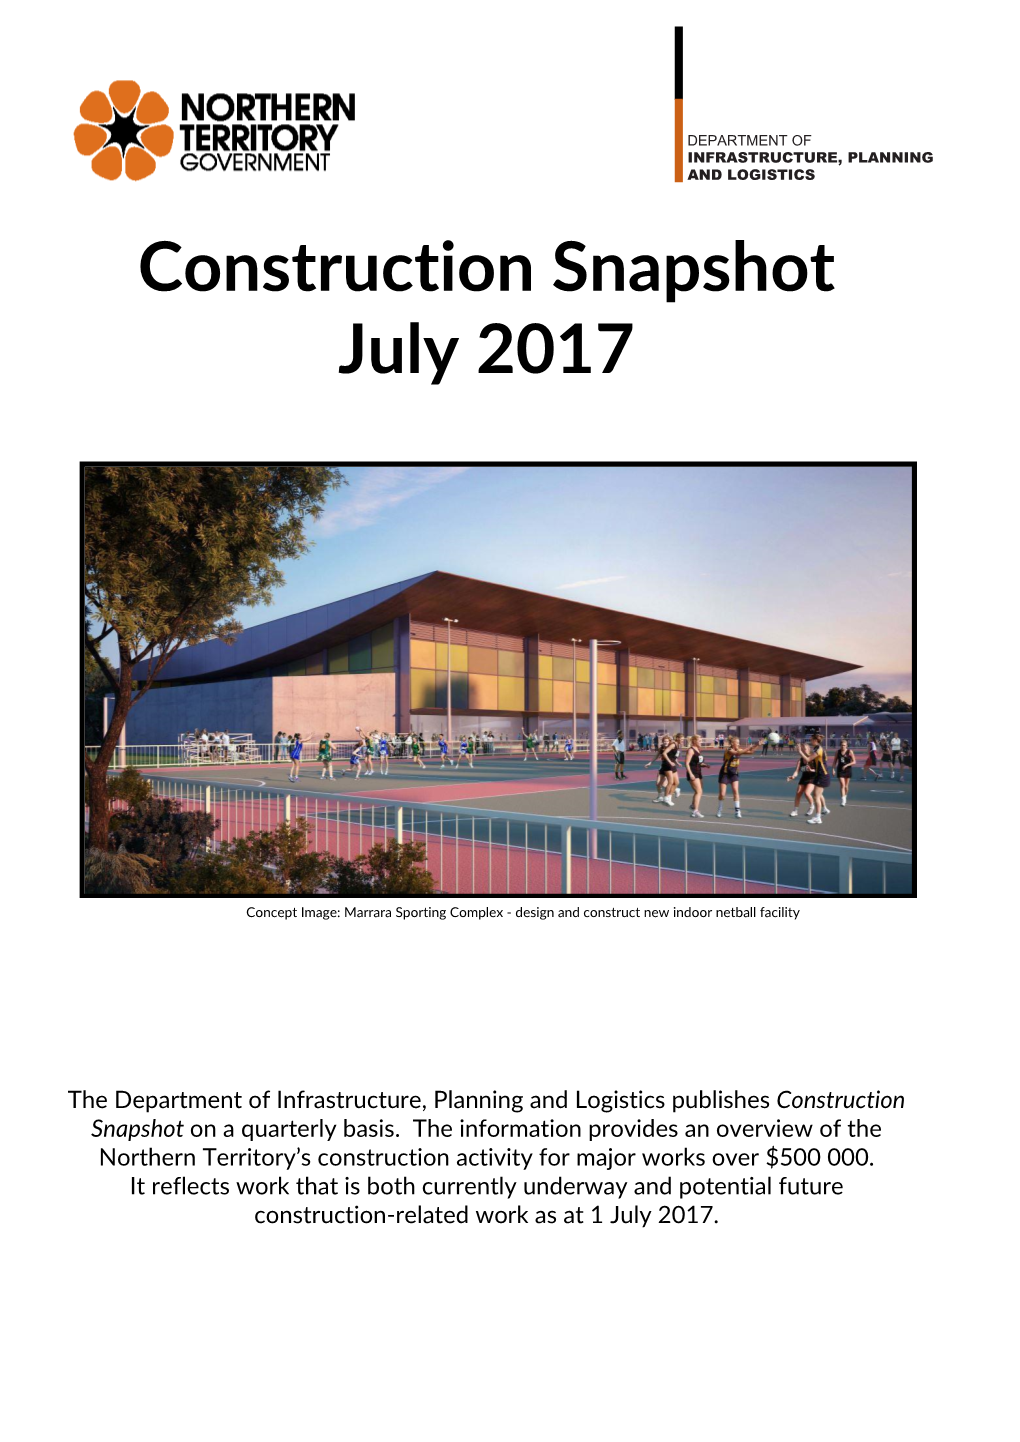 Construction Snapshot July 2017